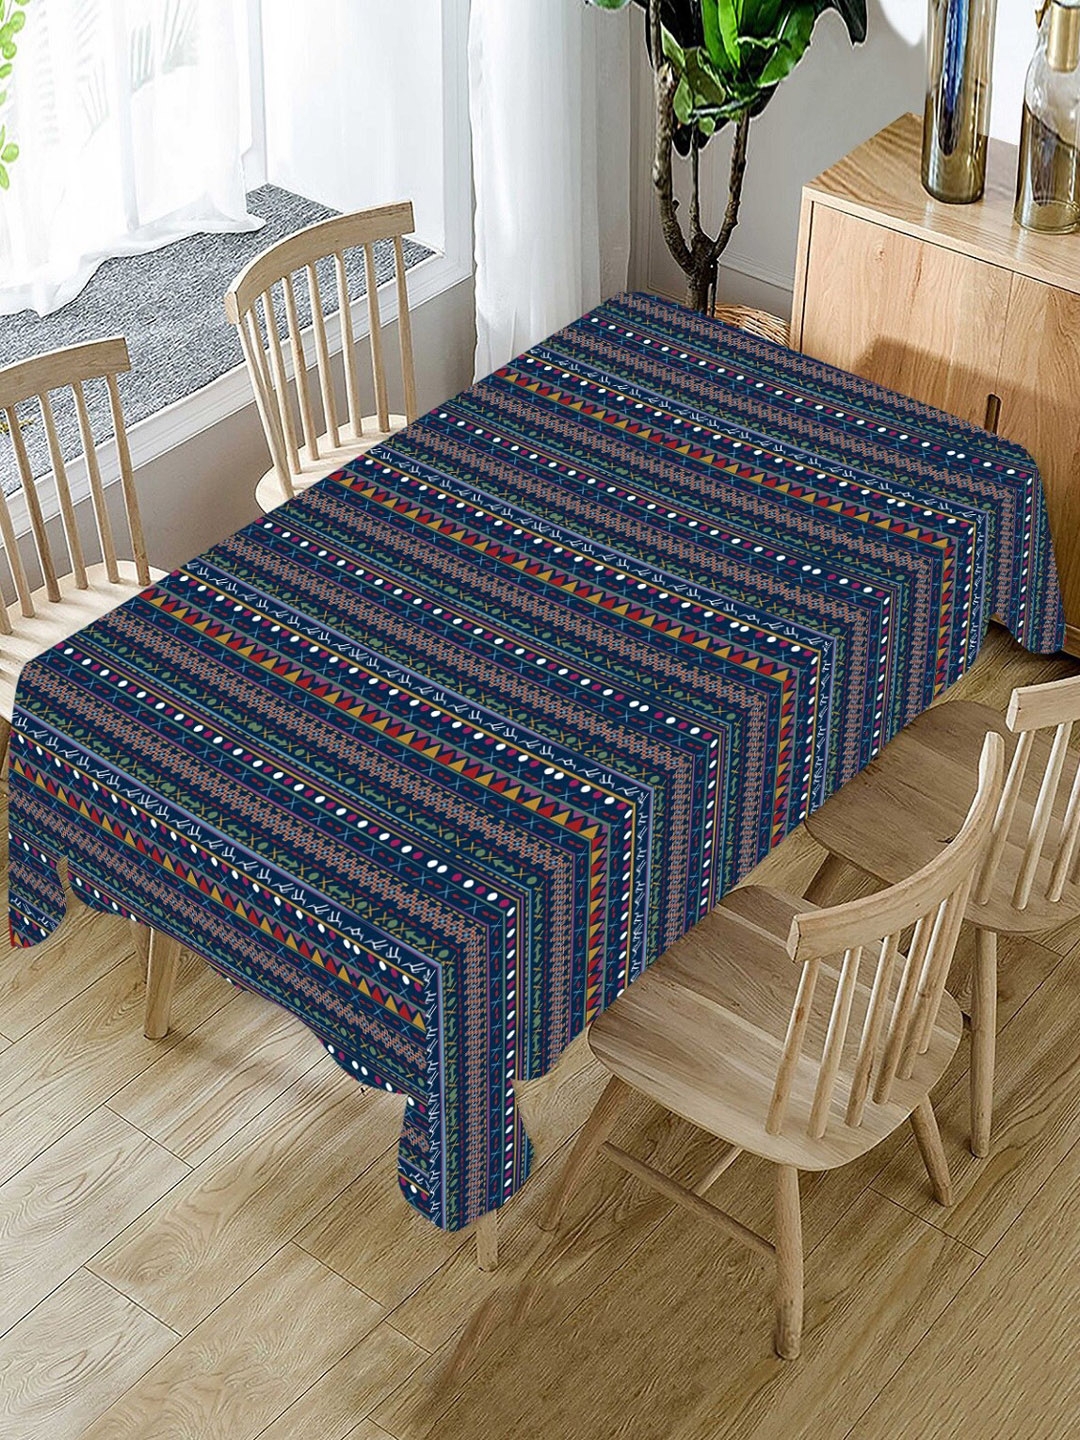 AEROHAVEN Multicoloured Geometric Printed Cotton 4 Seater Table Cover